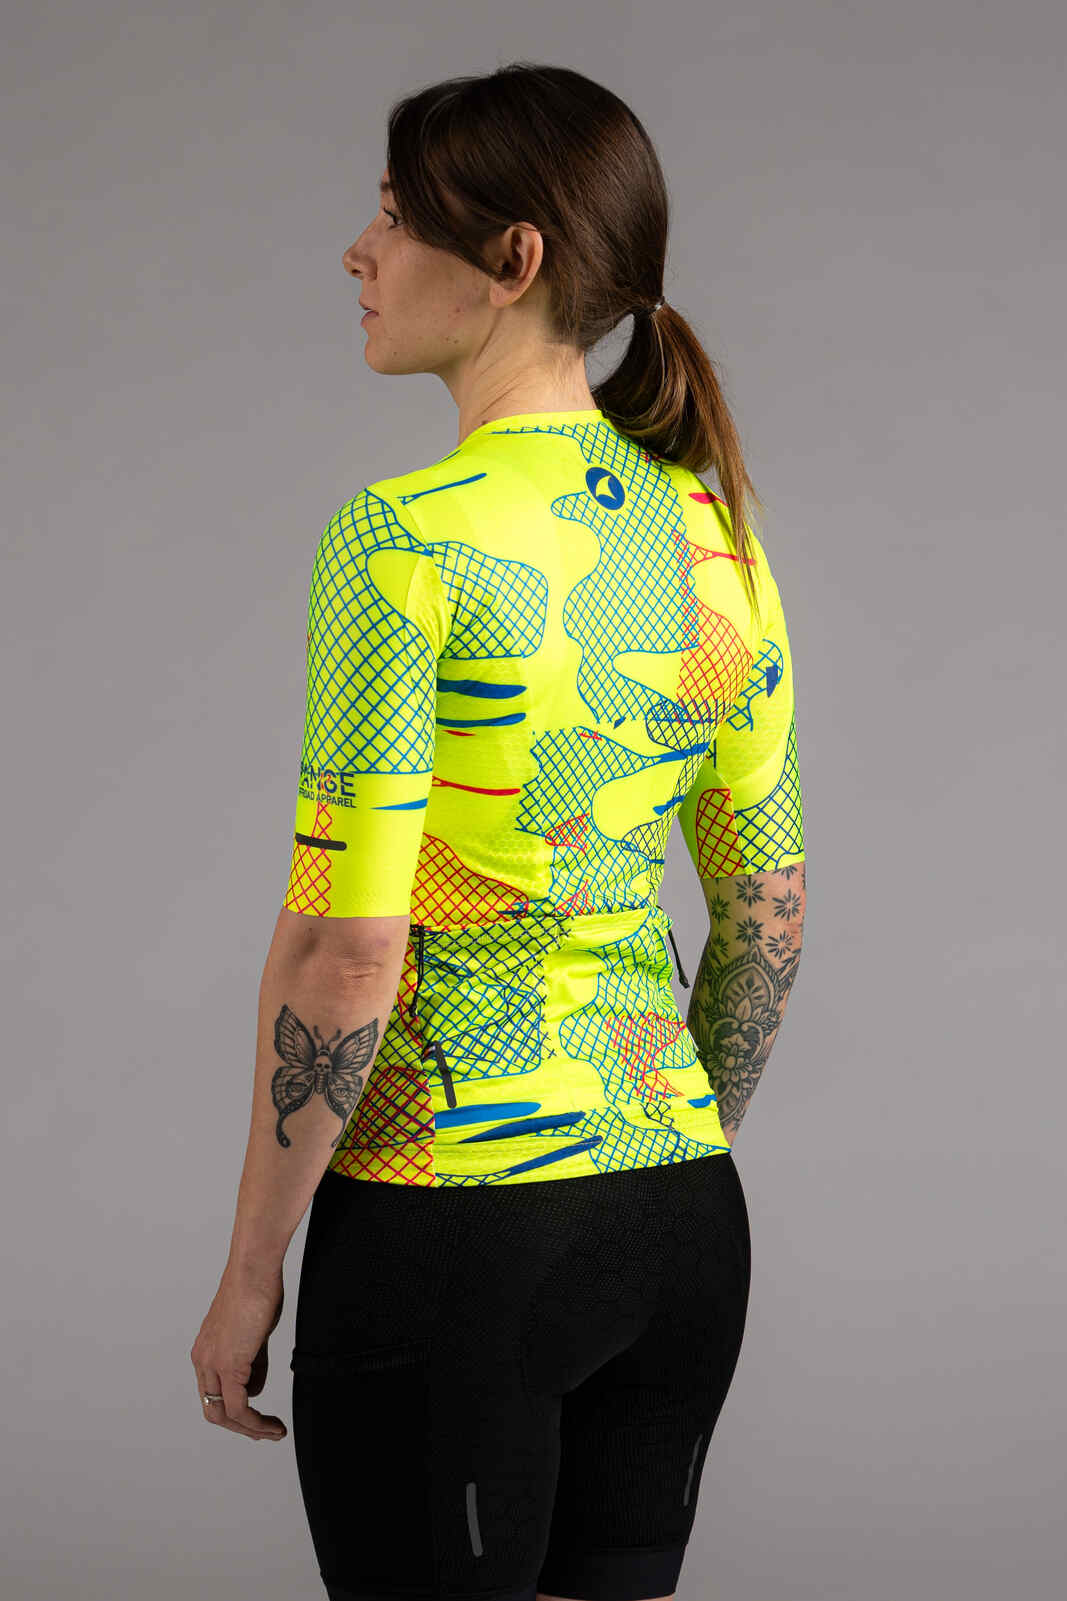 Women's High-Viz Yellow Gravel Cycling Jersey - Back View